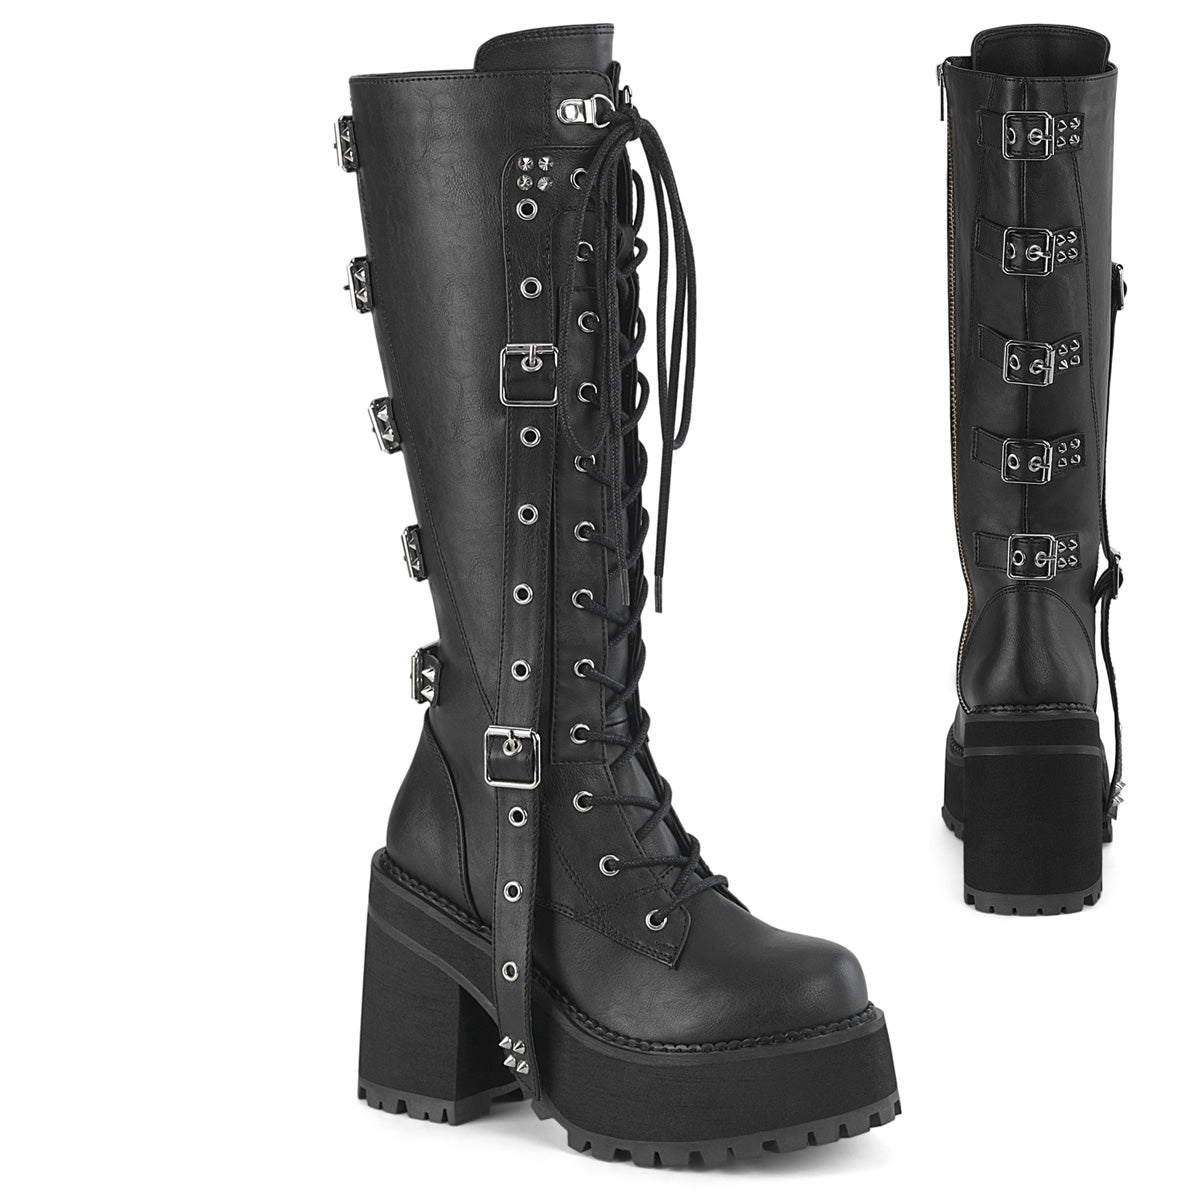 DEMONIA "Assault-218" Boots - Black Vegan Leather